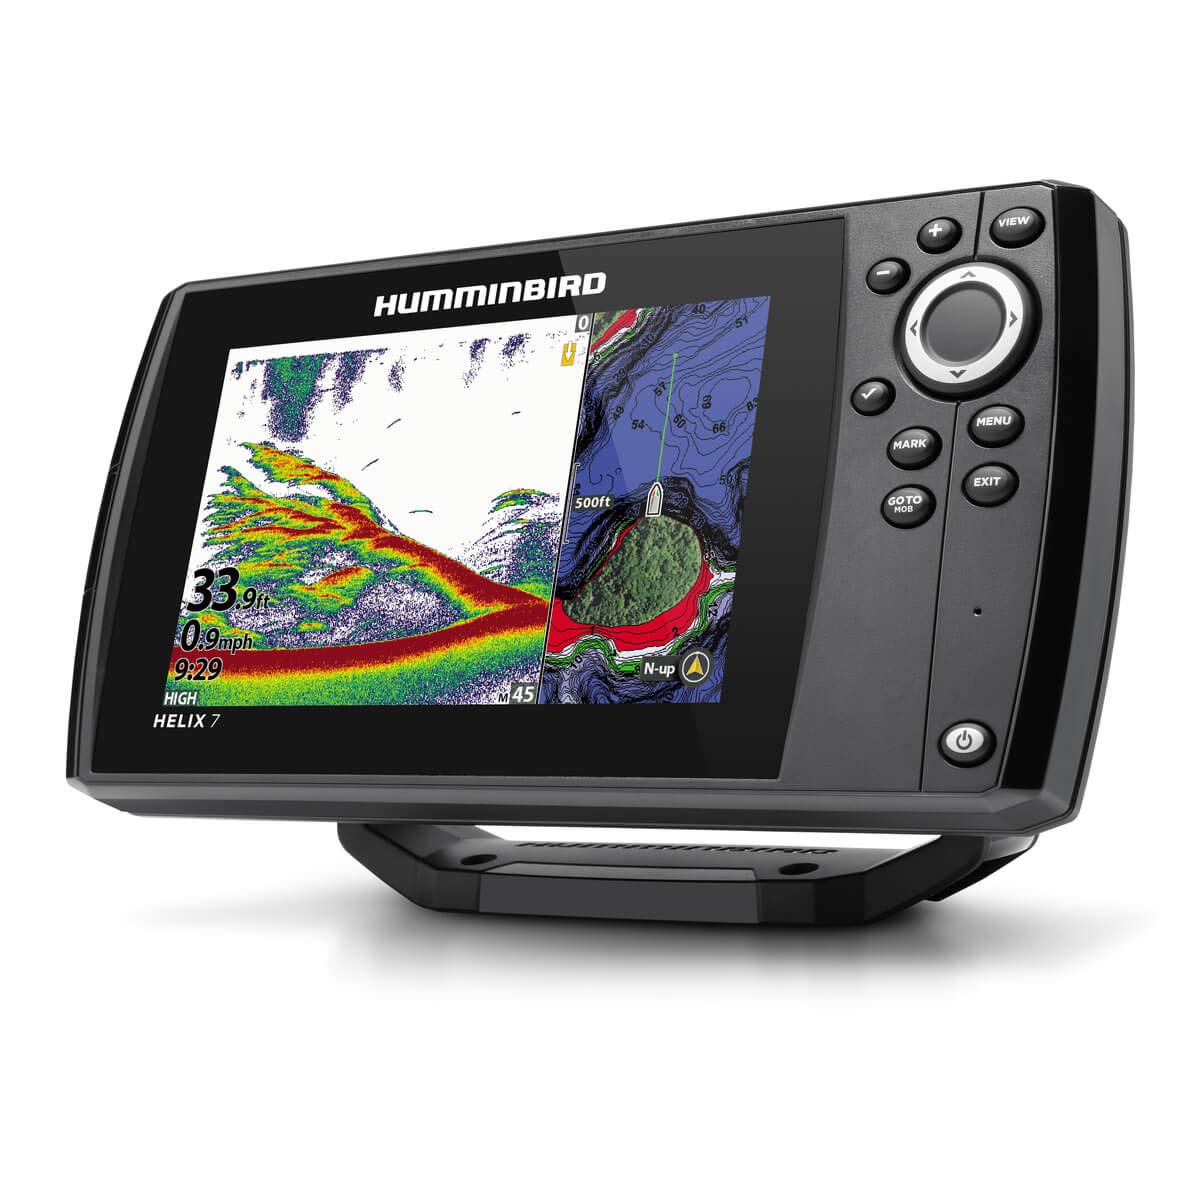 Humminbird 410950-1 HELIX 7 CHIRP MSI (MEGA Side Imaging) GPS G3 Fish Finder